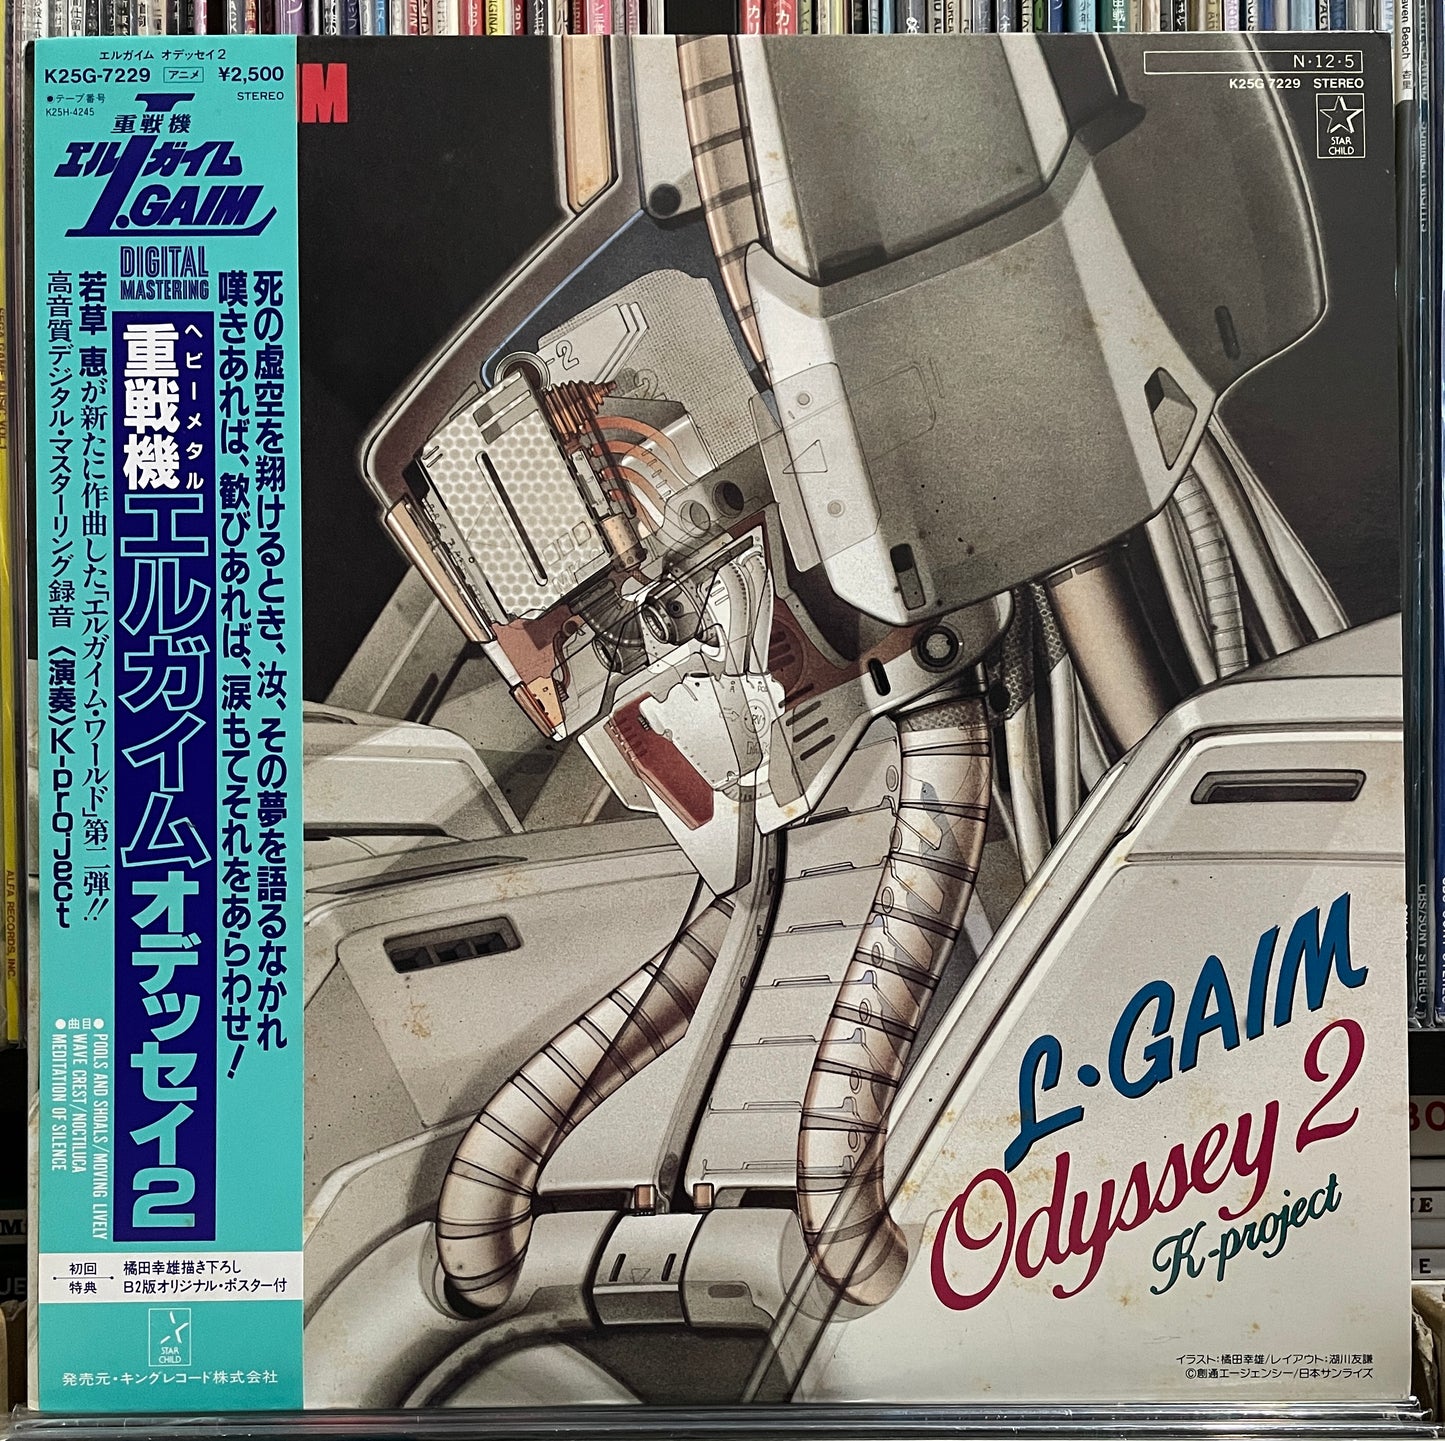 Heavy Metal L Gaim Odyssey 2 “K-Project” (1984)